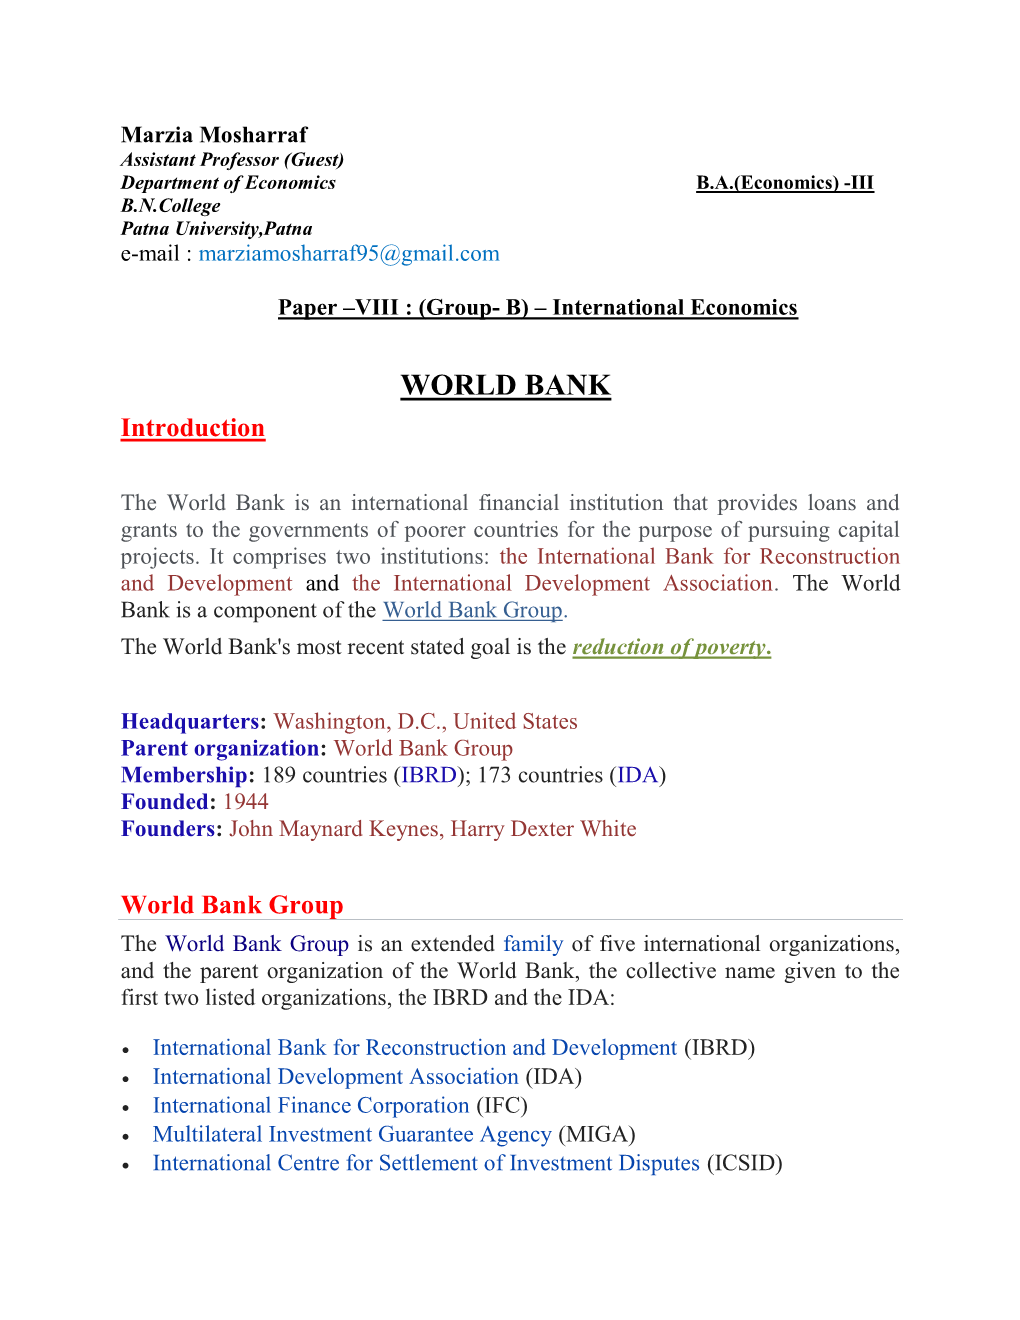 WORLD BANK Introduction